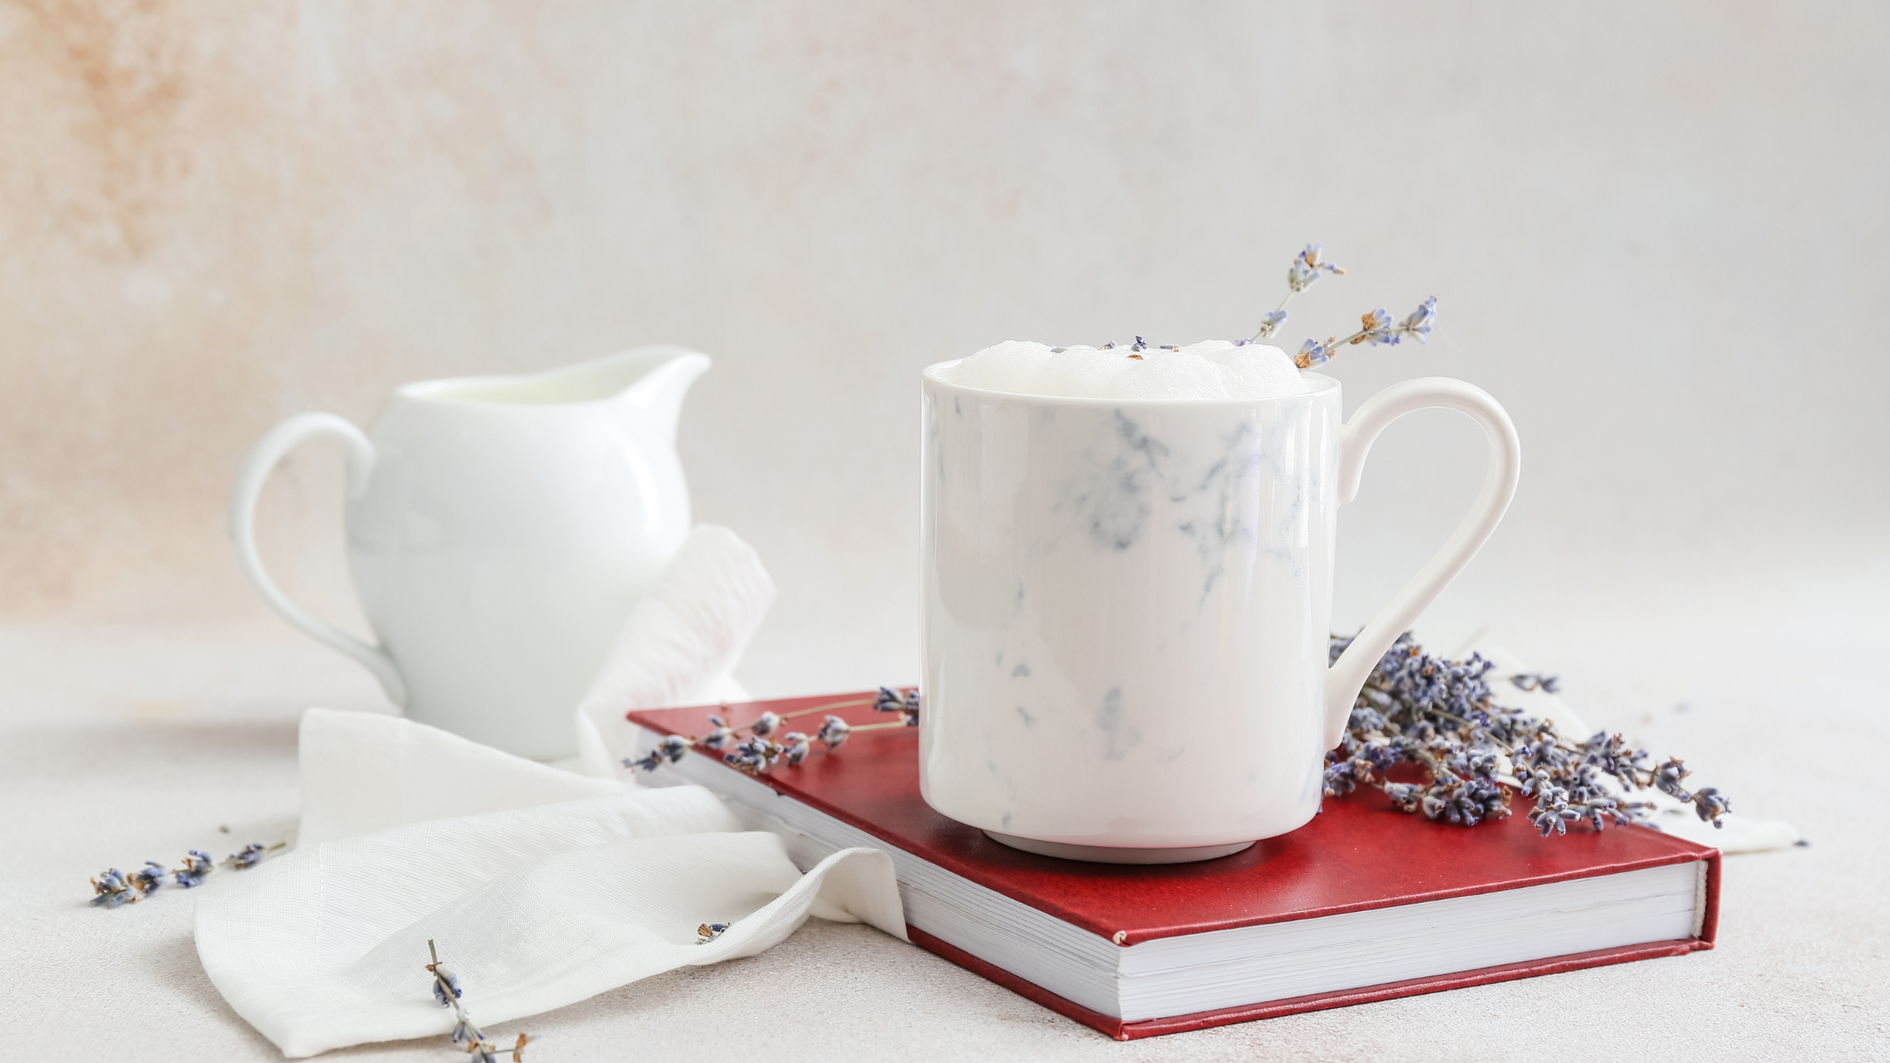 Lavender Latte Recipe With a Twist of Tasty Tea